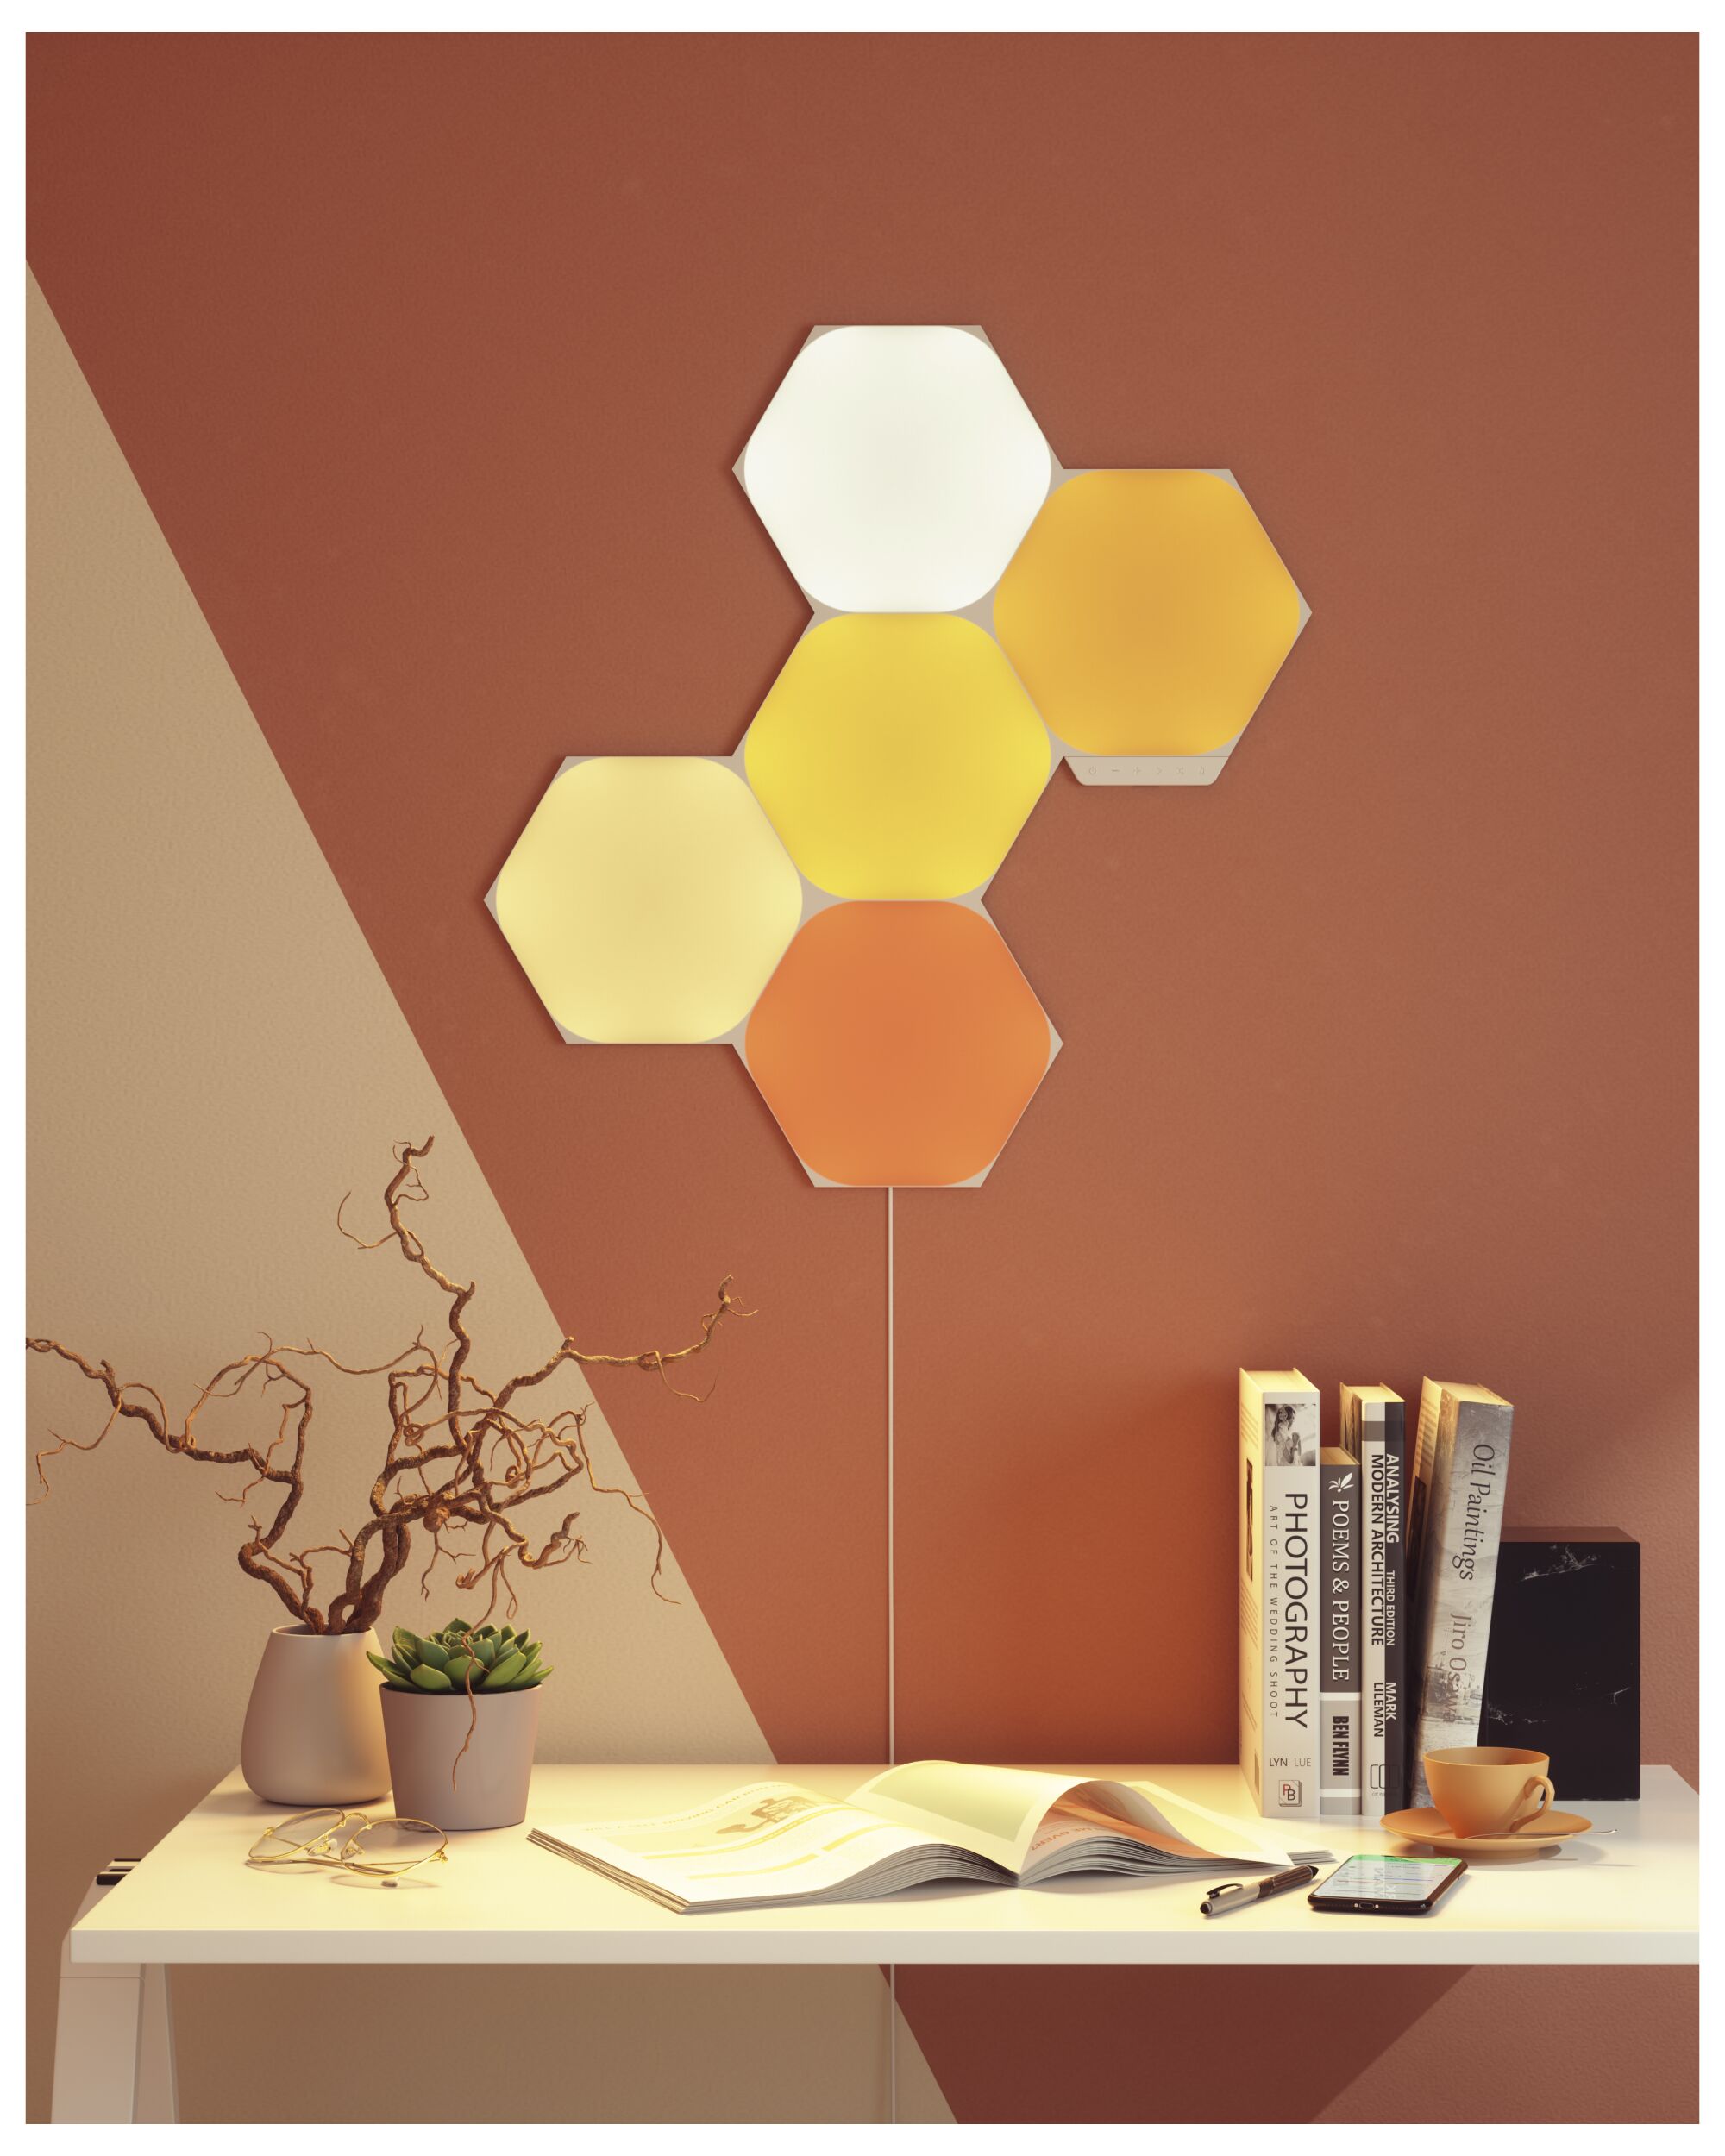 The Hexagon Smarter Kit by Nanoleaf 